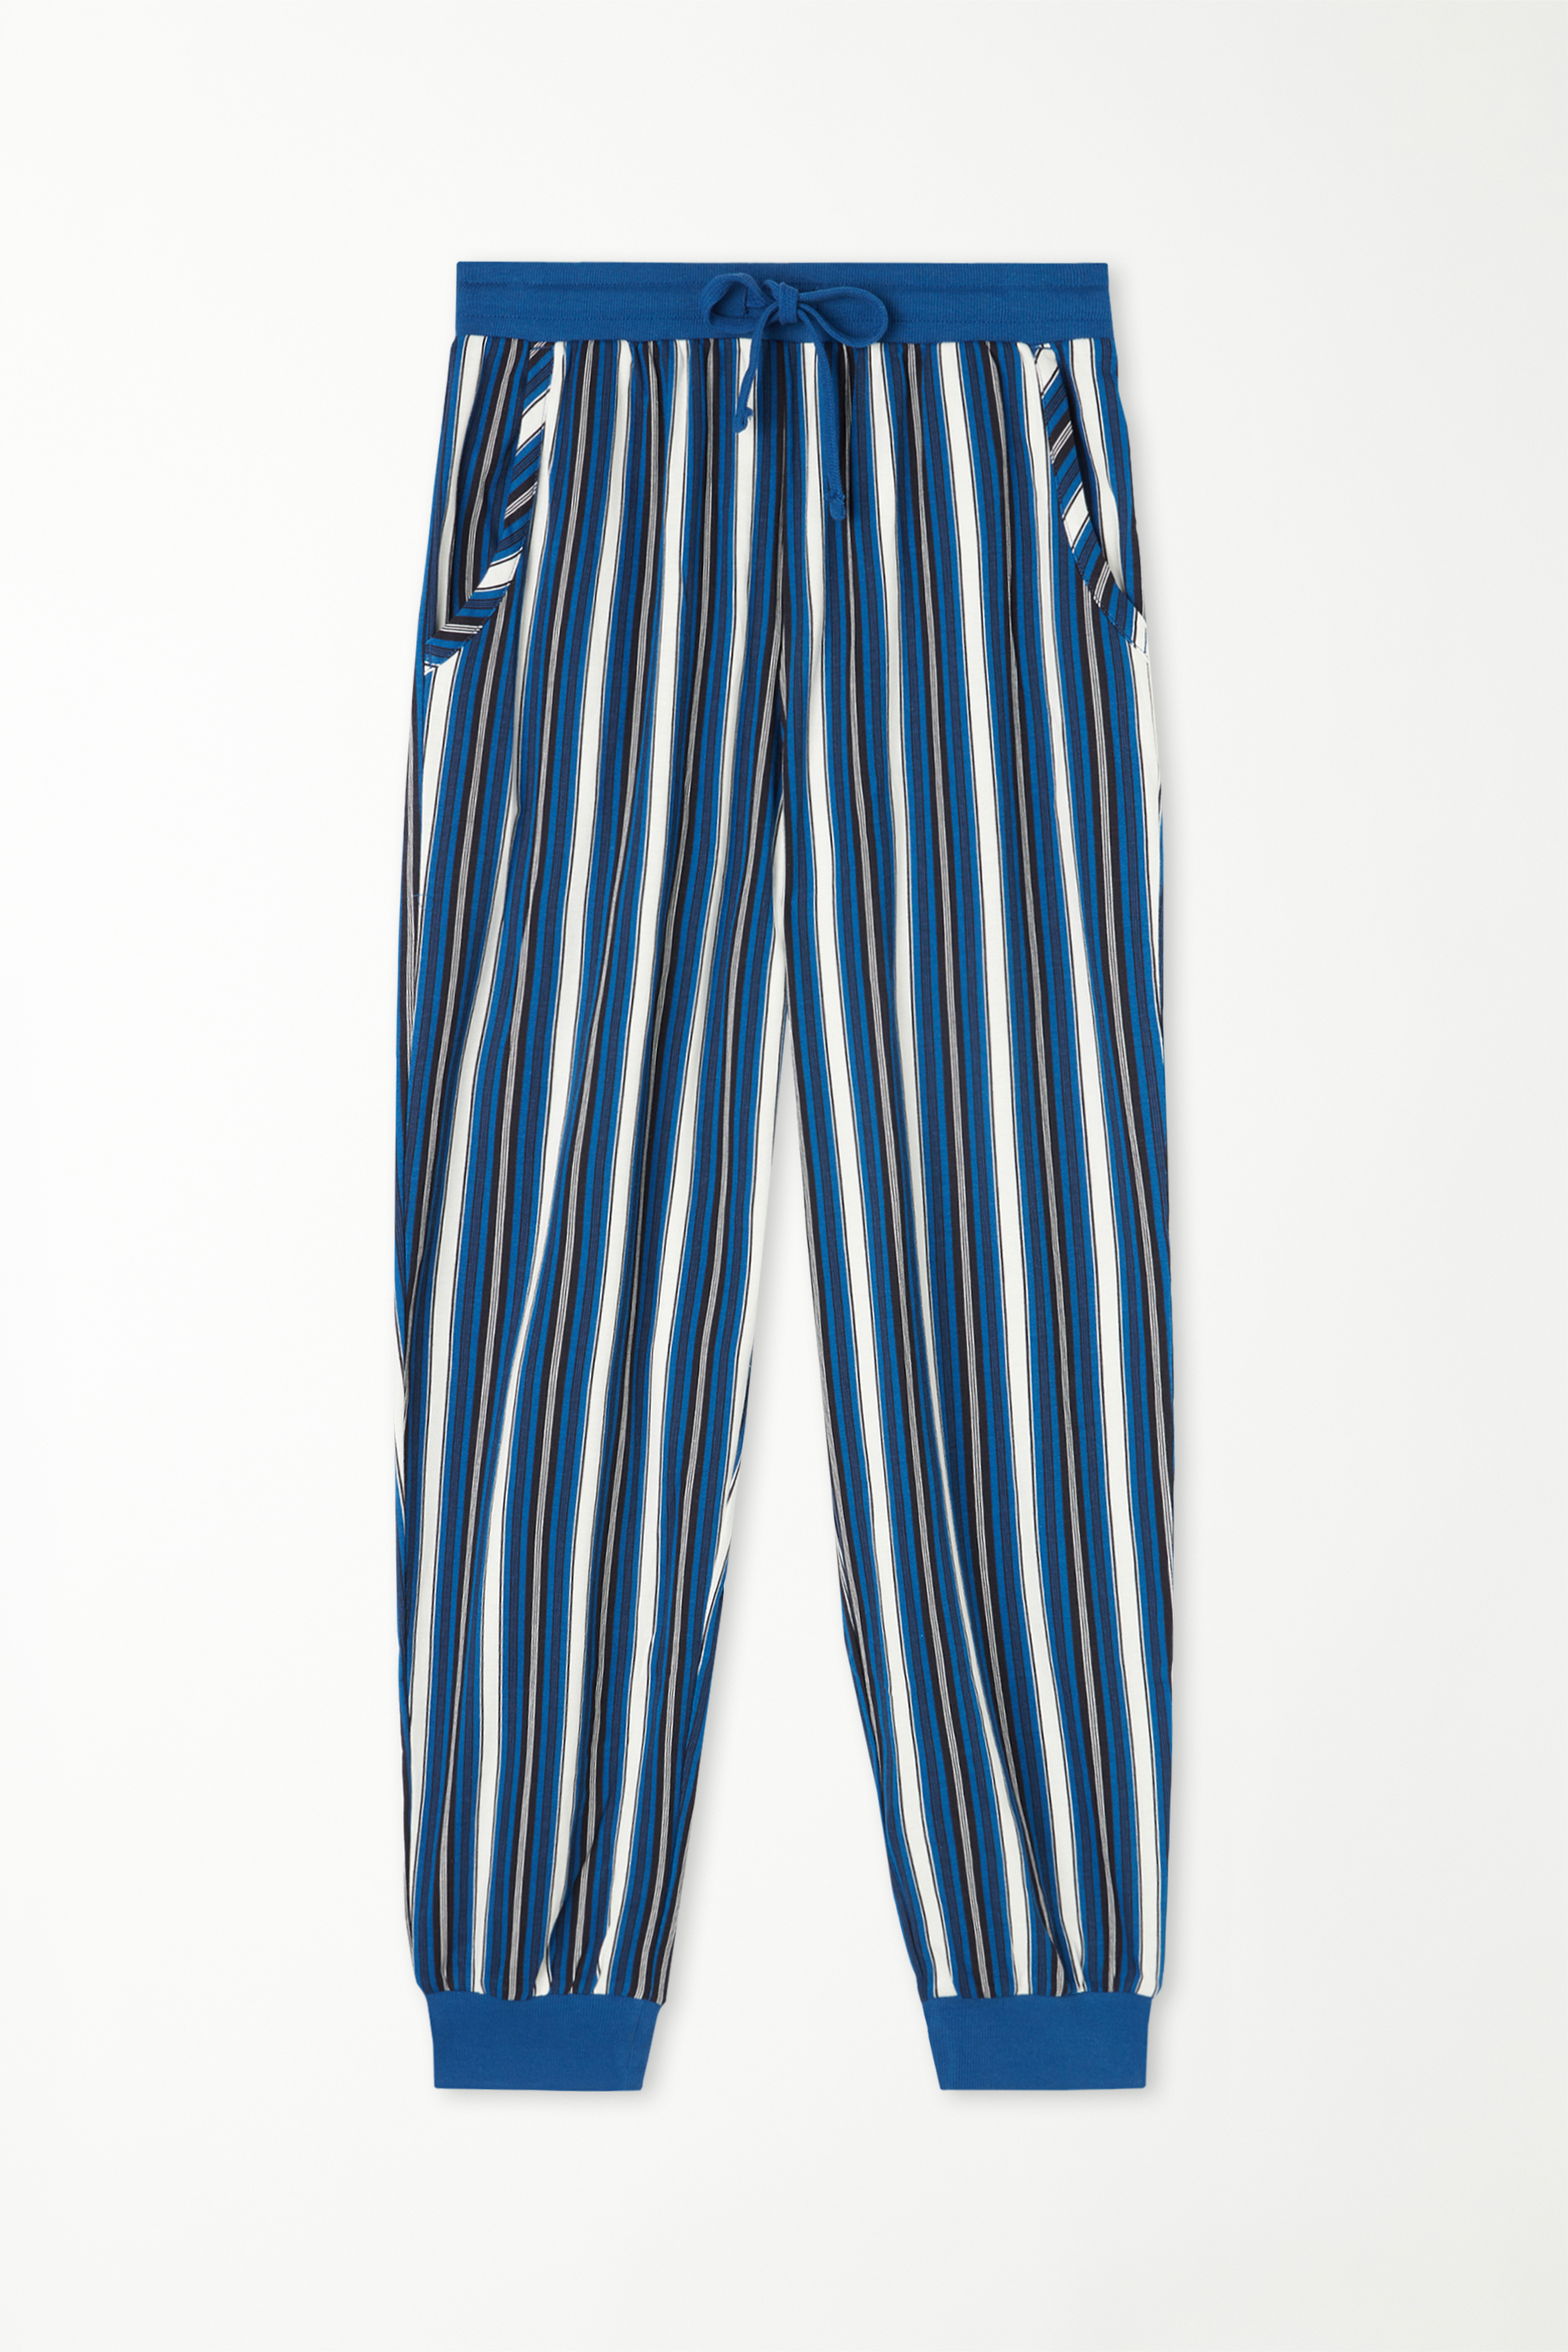 Pantalon Long en Coton avec Cordon de Serrage